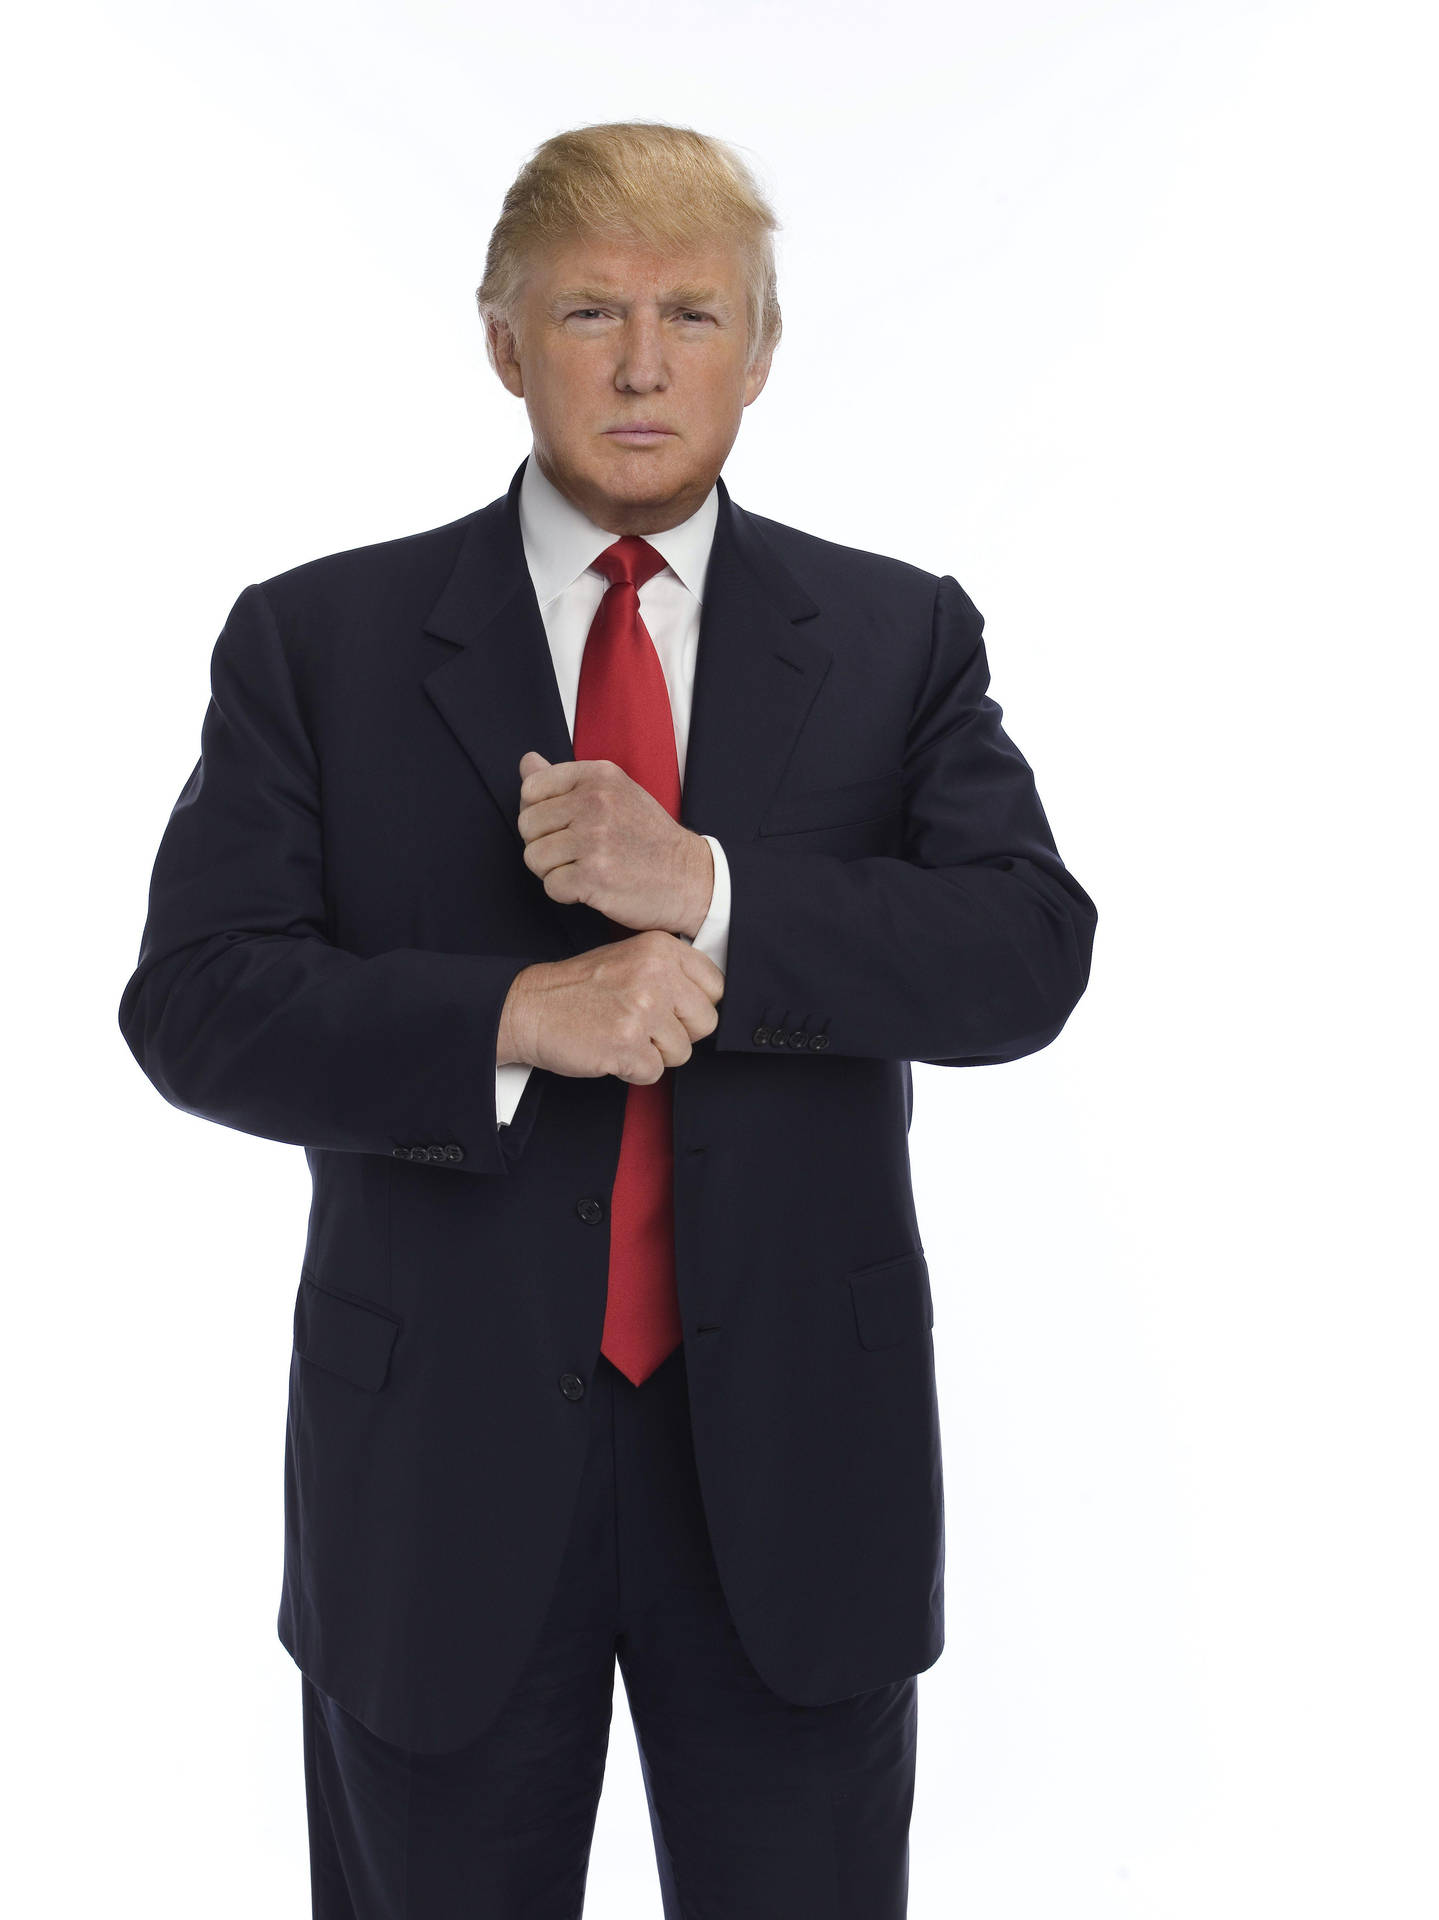 Donald Trump With Cufflinks Wallpaper